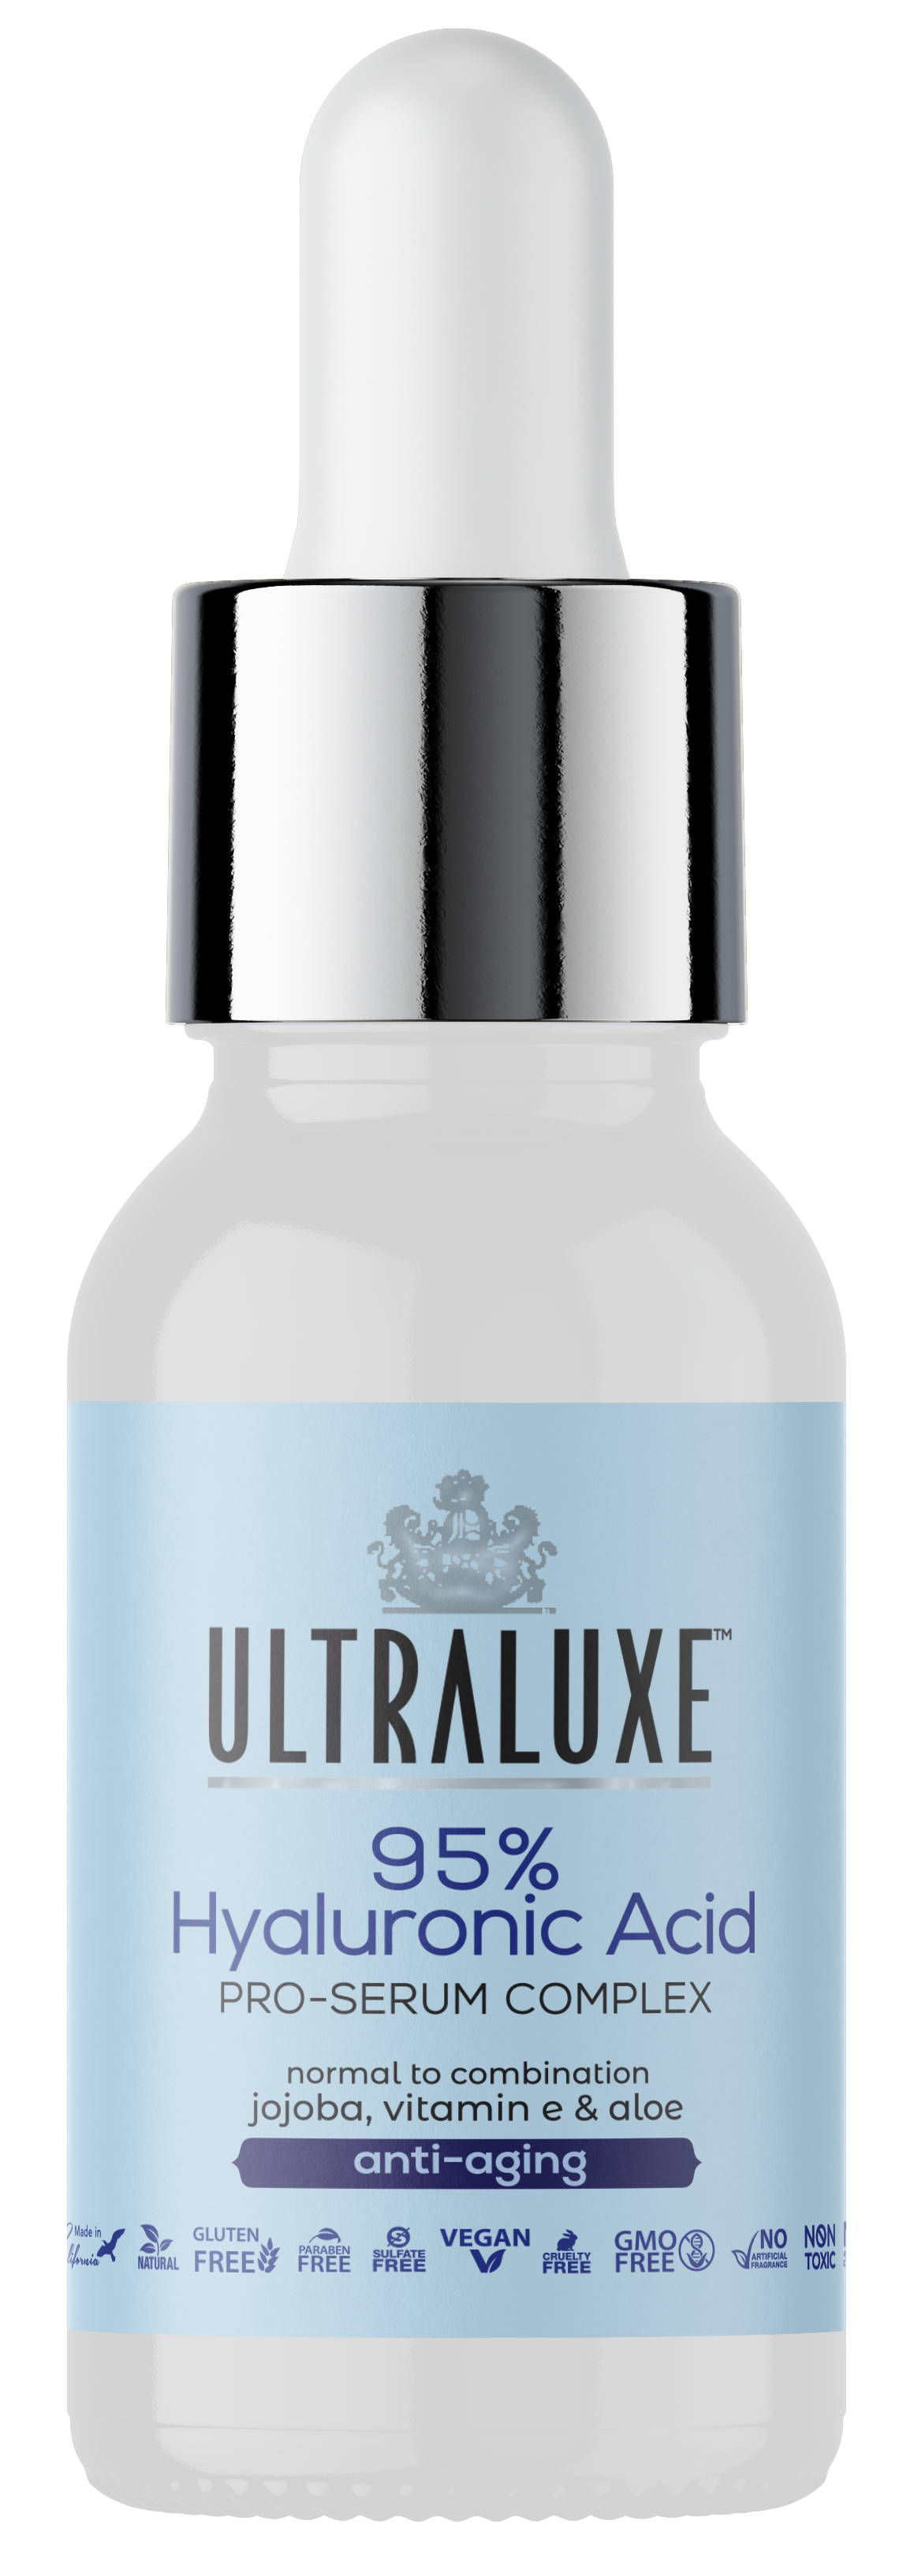 UltraLuxe 95% Hyaluronic Acid Pro-Serum Complex